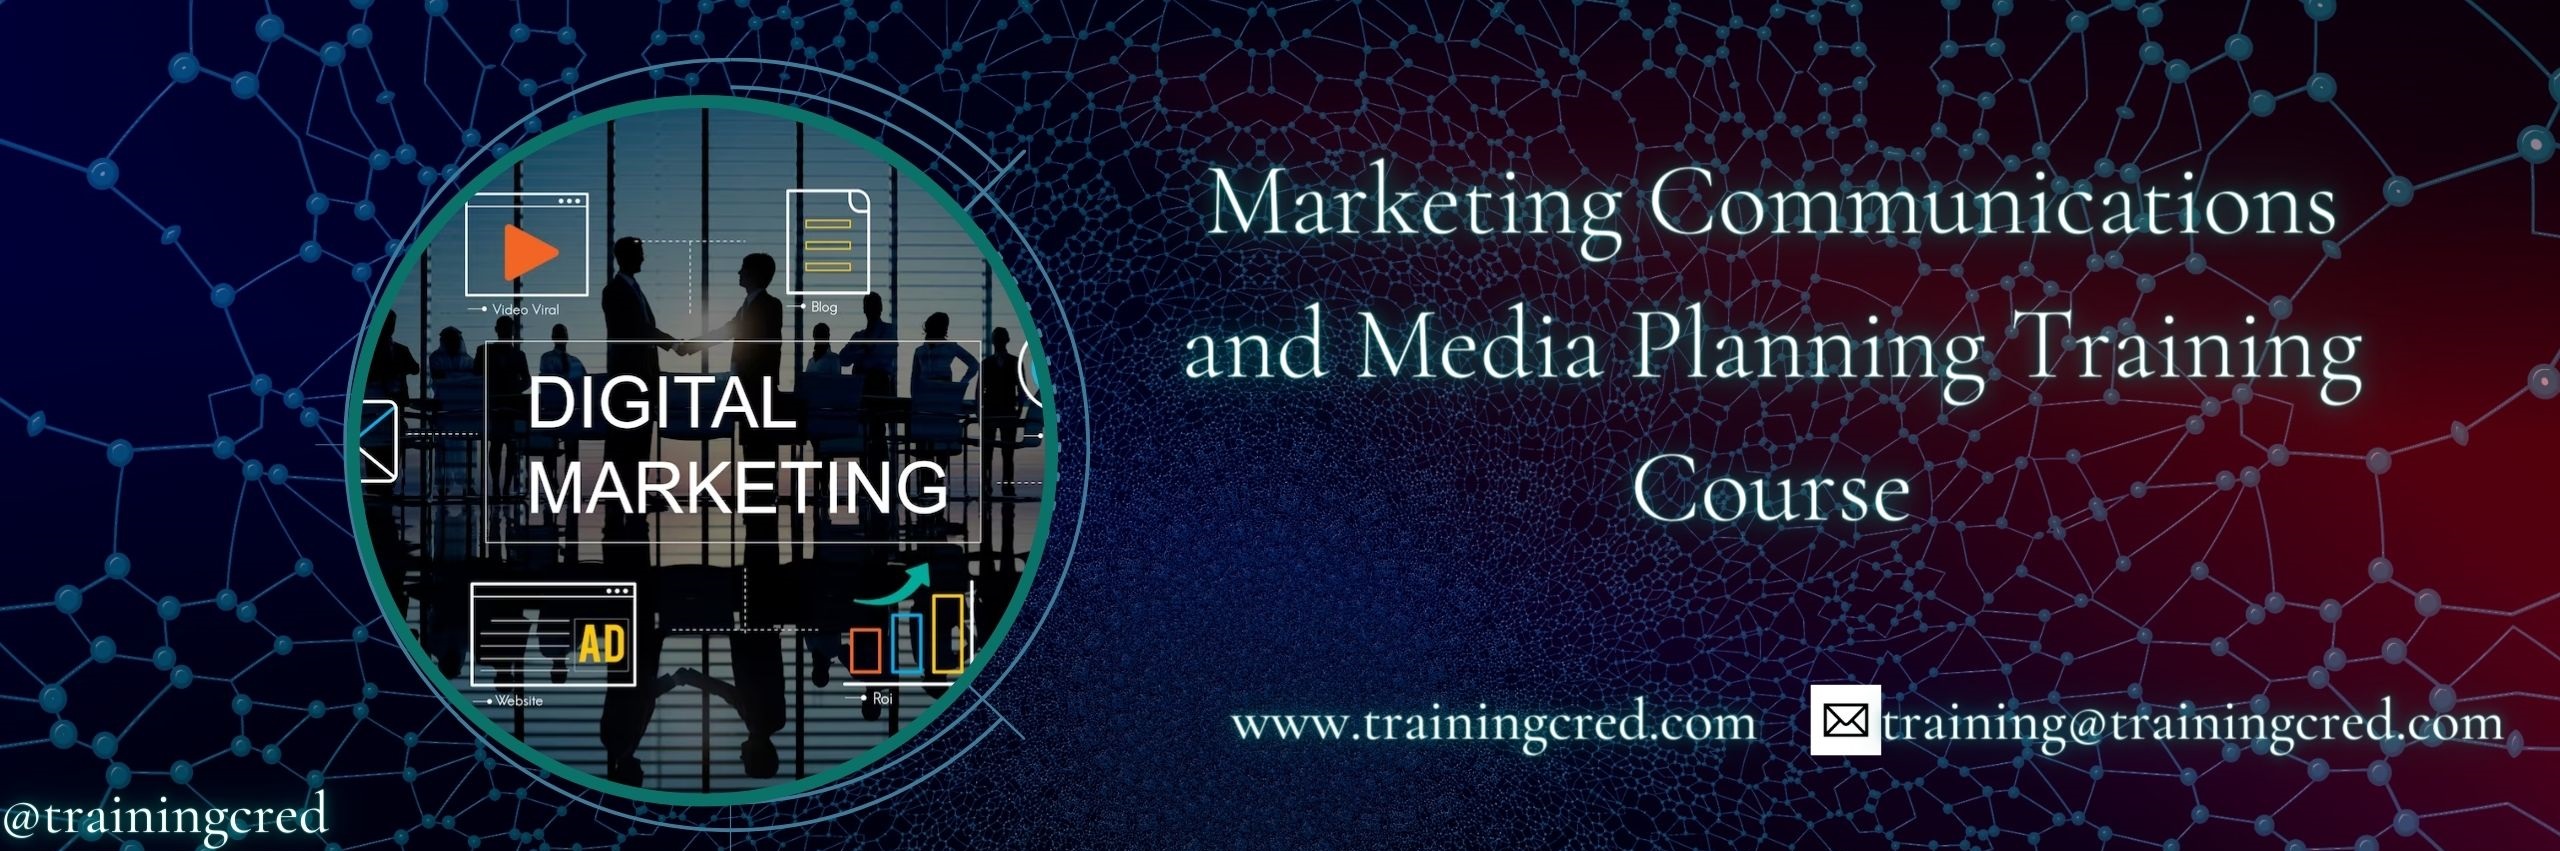 Marketing Communications and Media Planning Training